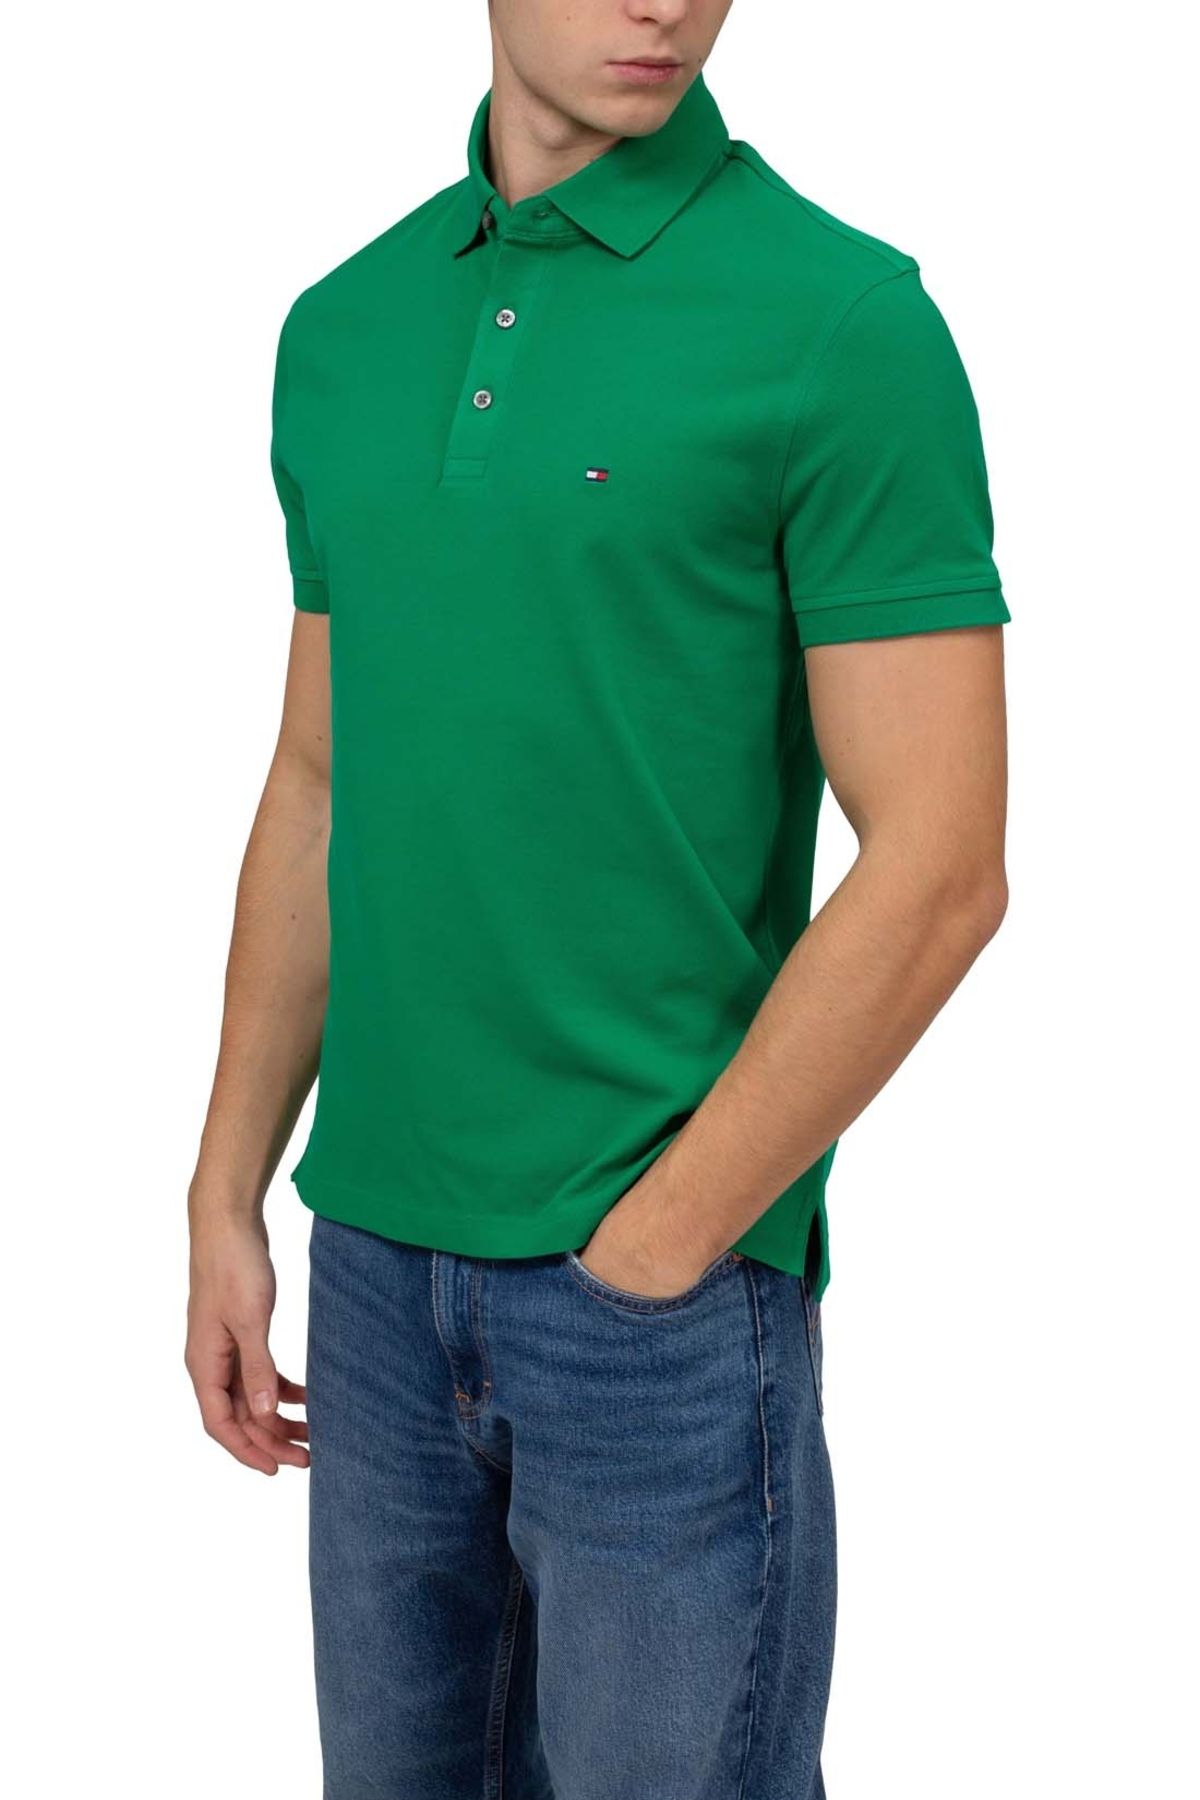 Tommy Hilfiger Erkek Pamuklu Polo Yakalı Düğme Kapamalı Kısa Kollu Yeşil Polo Yaka T-Shirt